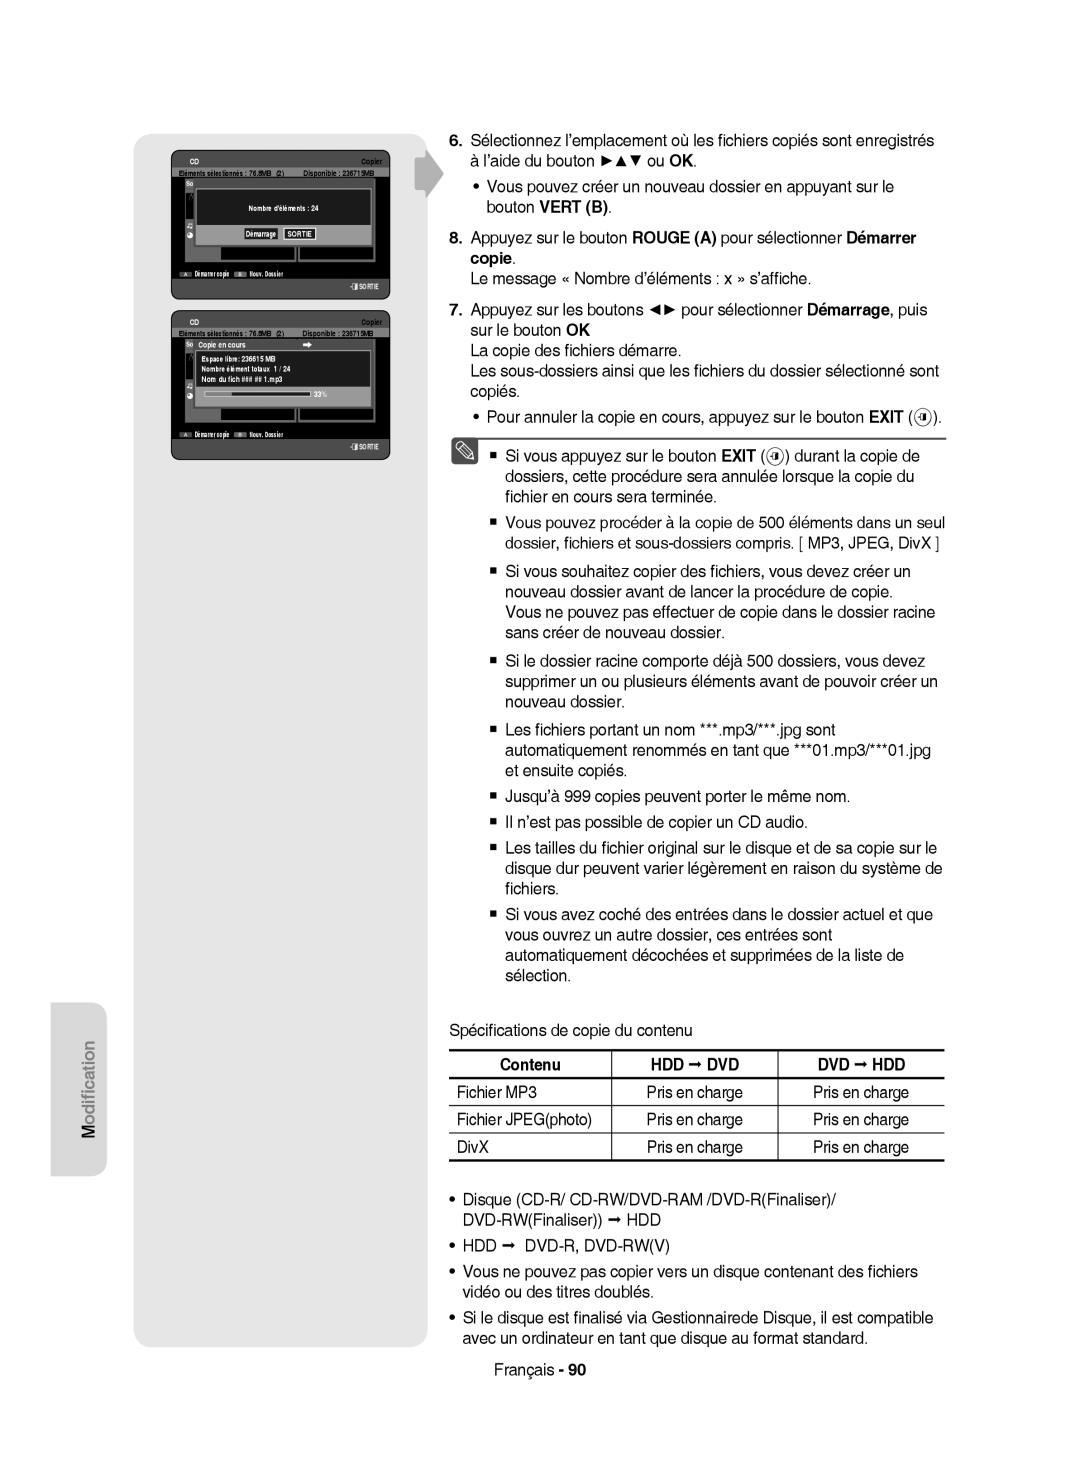 Samsung DVD-HR750/AUS manual Fichier MP3, Disque CD-R/ CD-RW/DVD-RAM /DVD-RFinaliser, Fichier JPEGphoto, DVD-RWFinaliser 